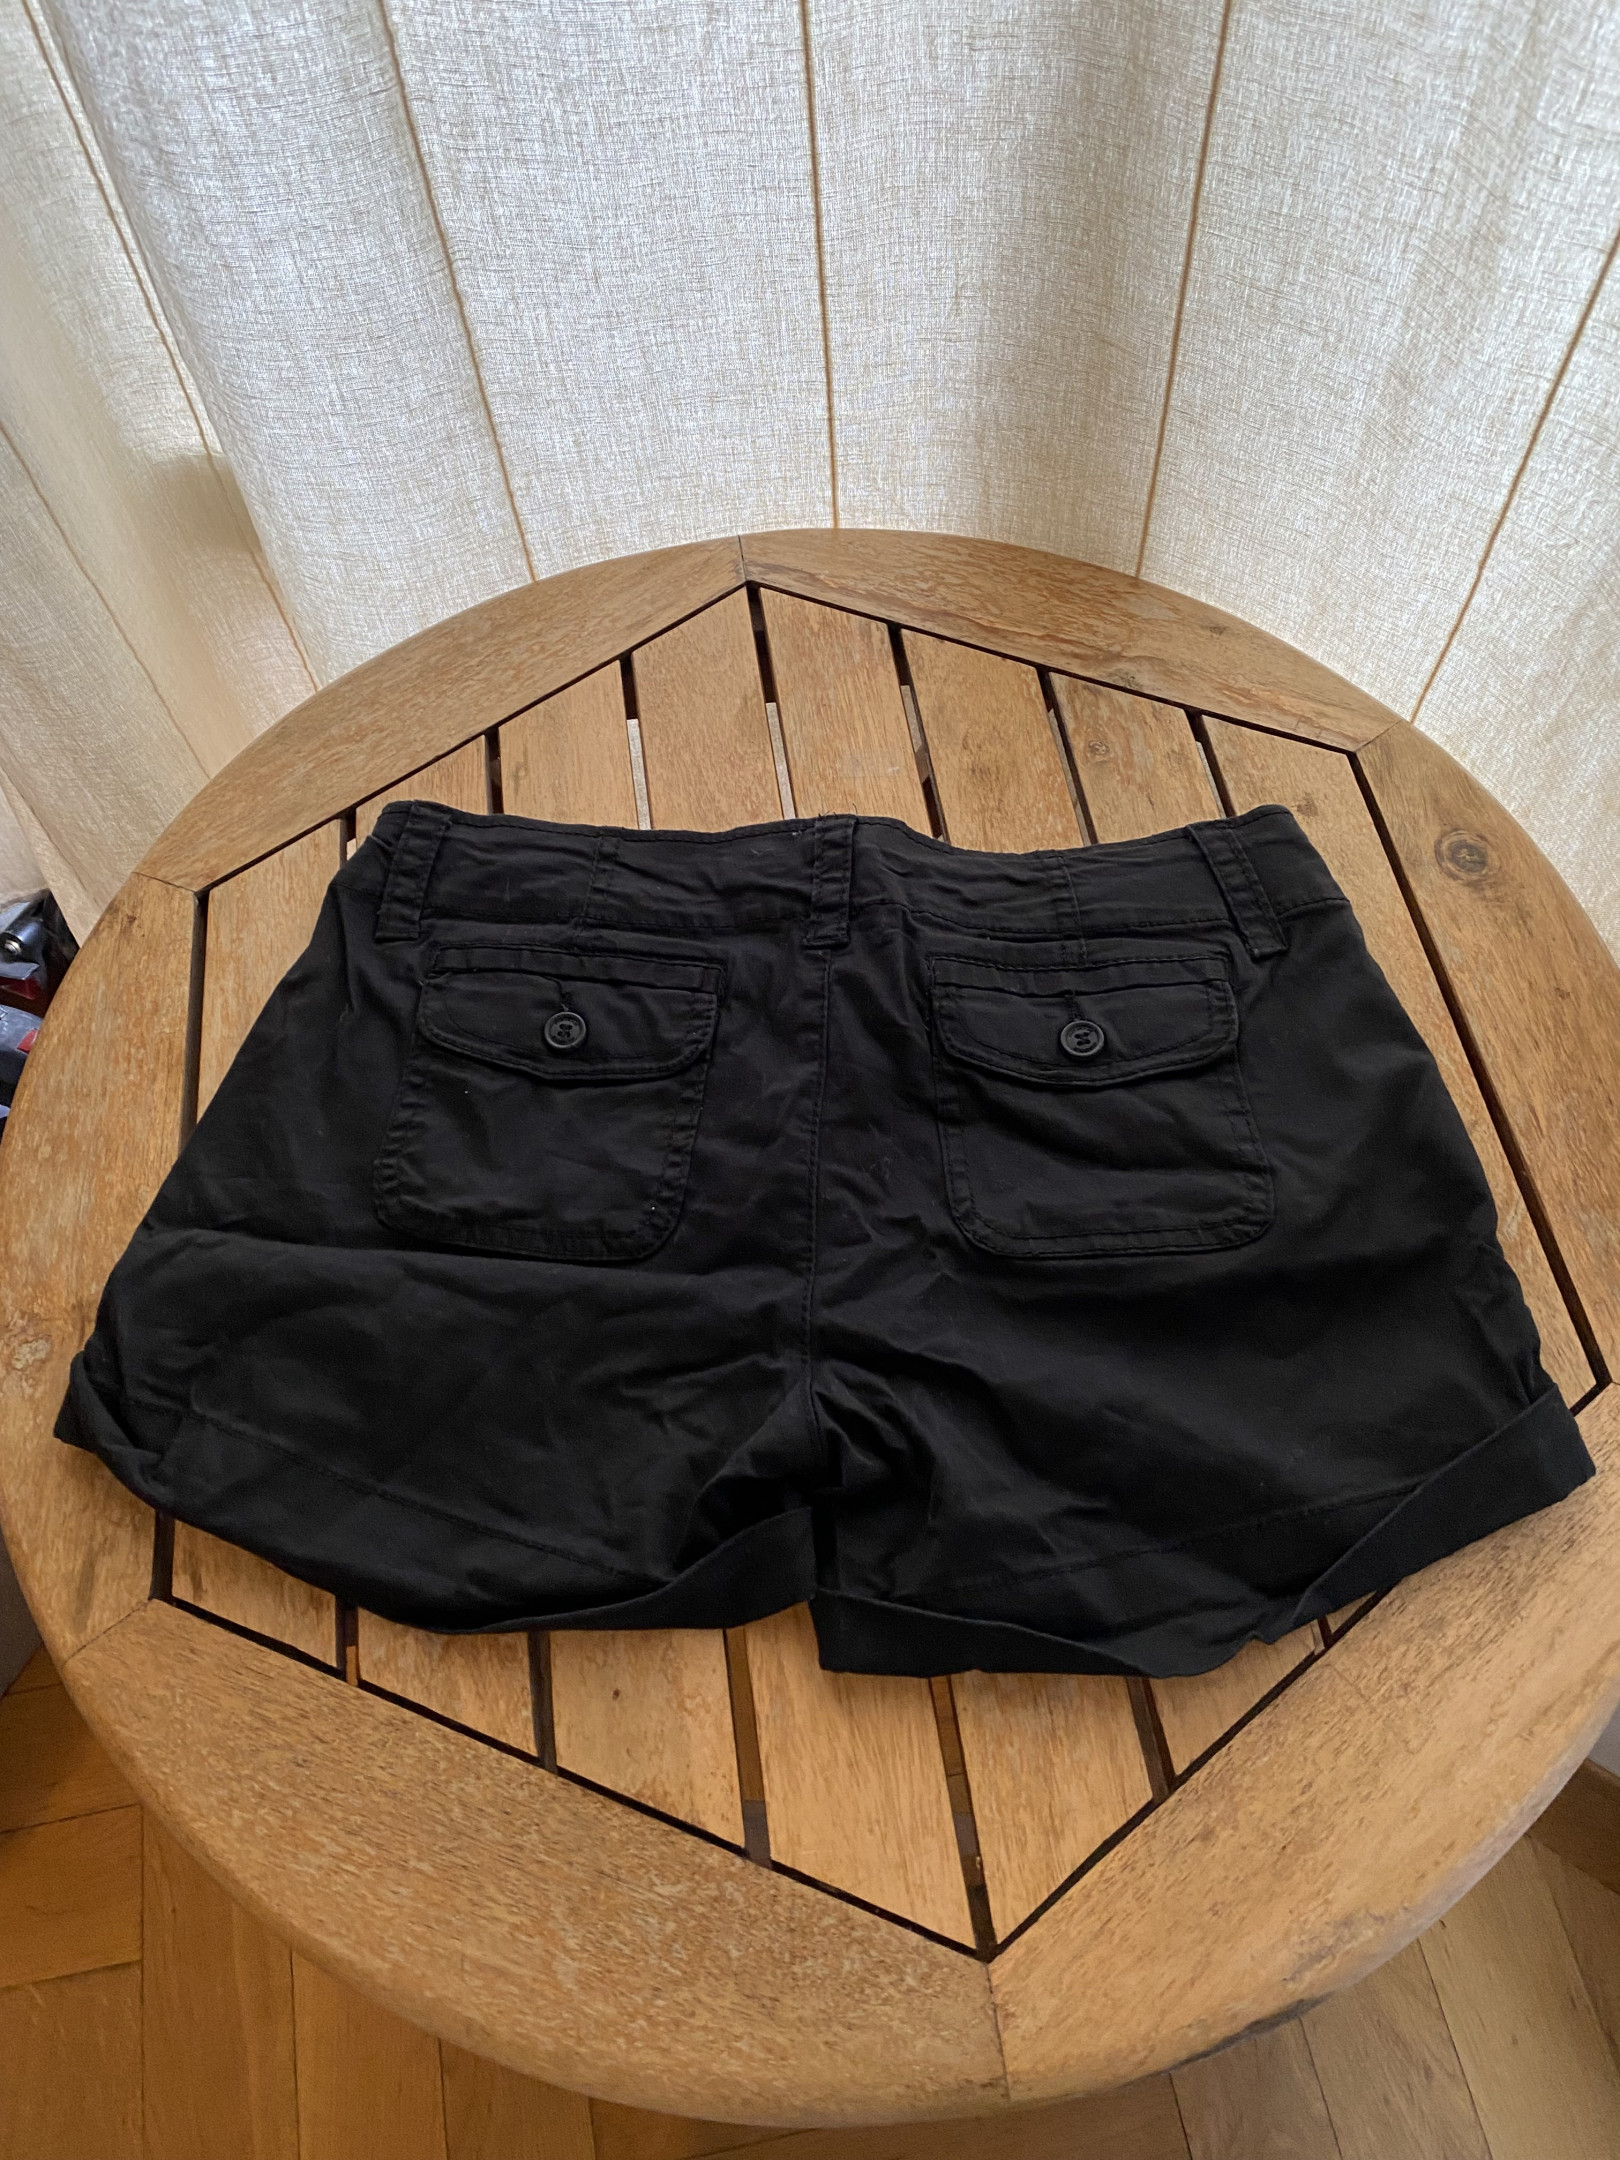 Black low-rise shorts. Size XS